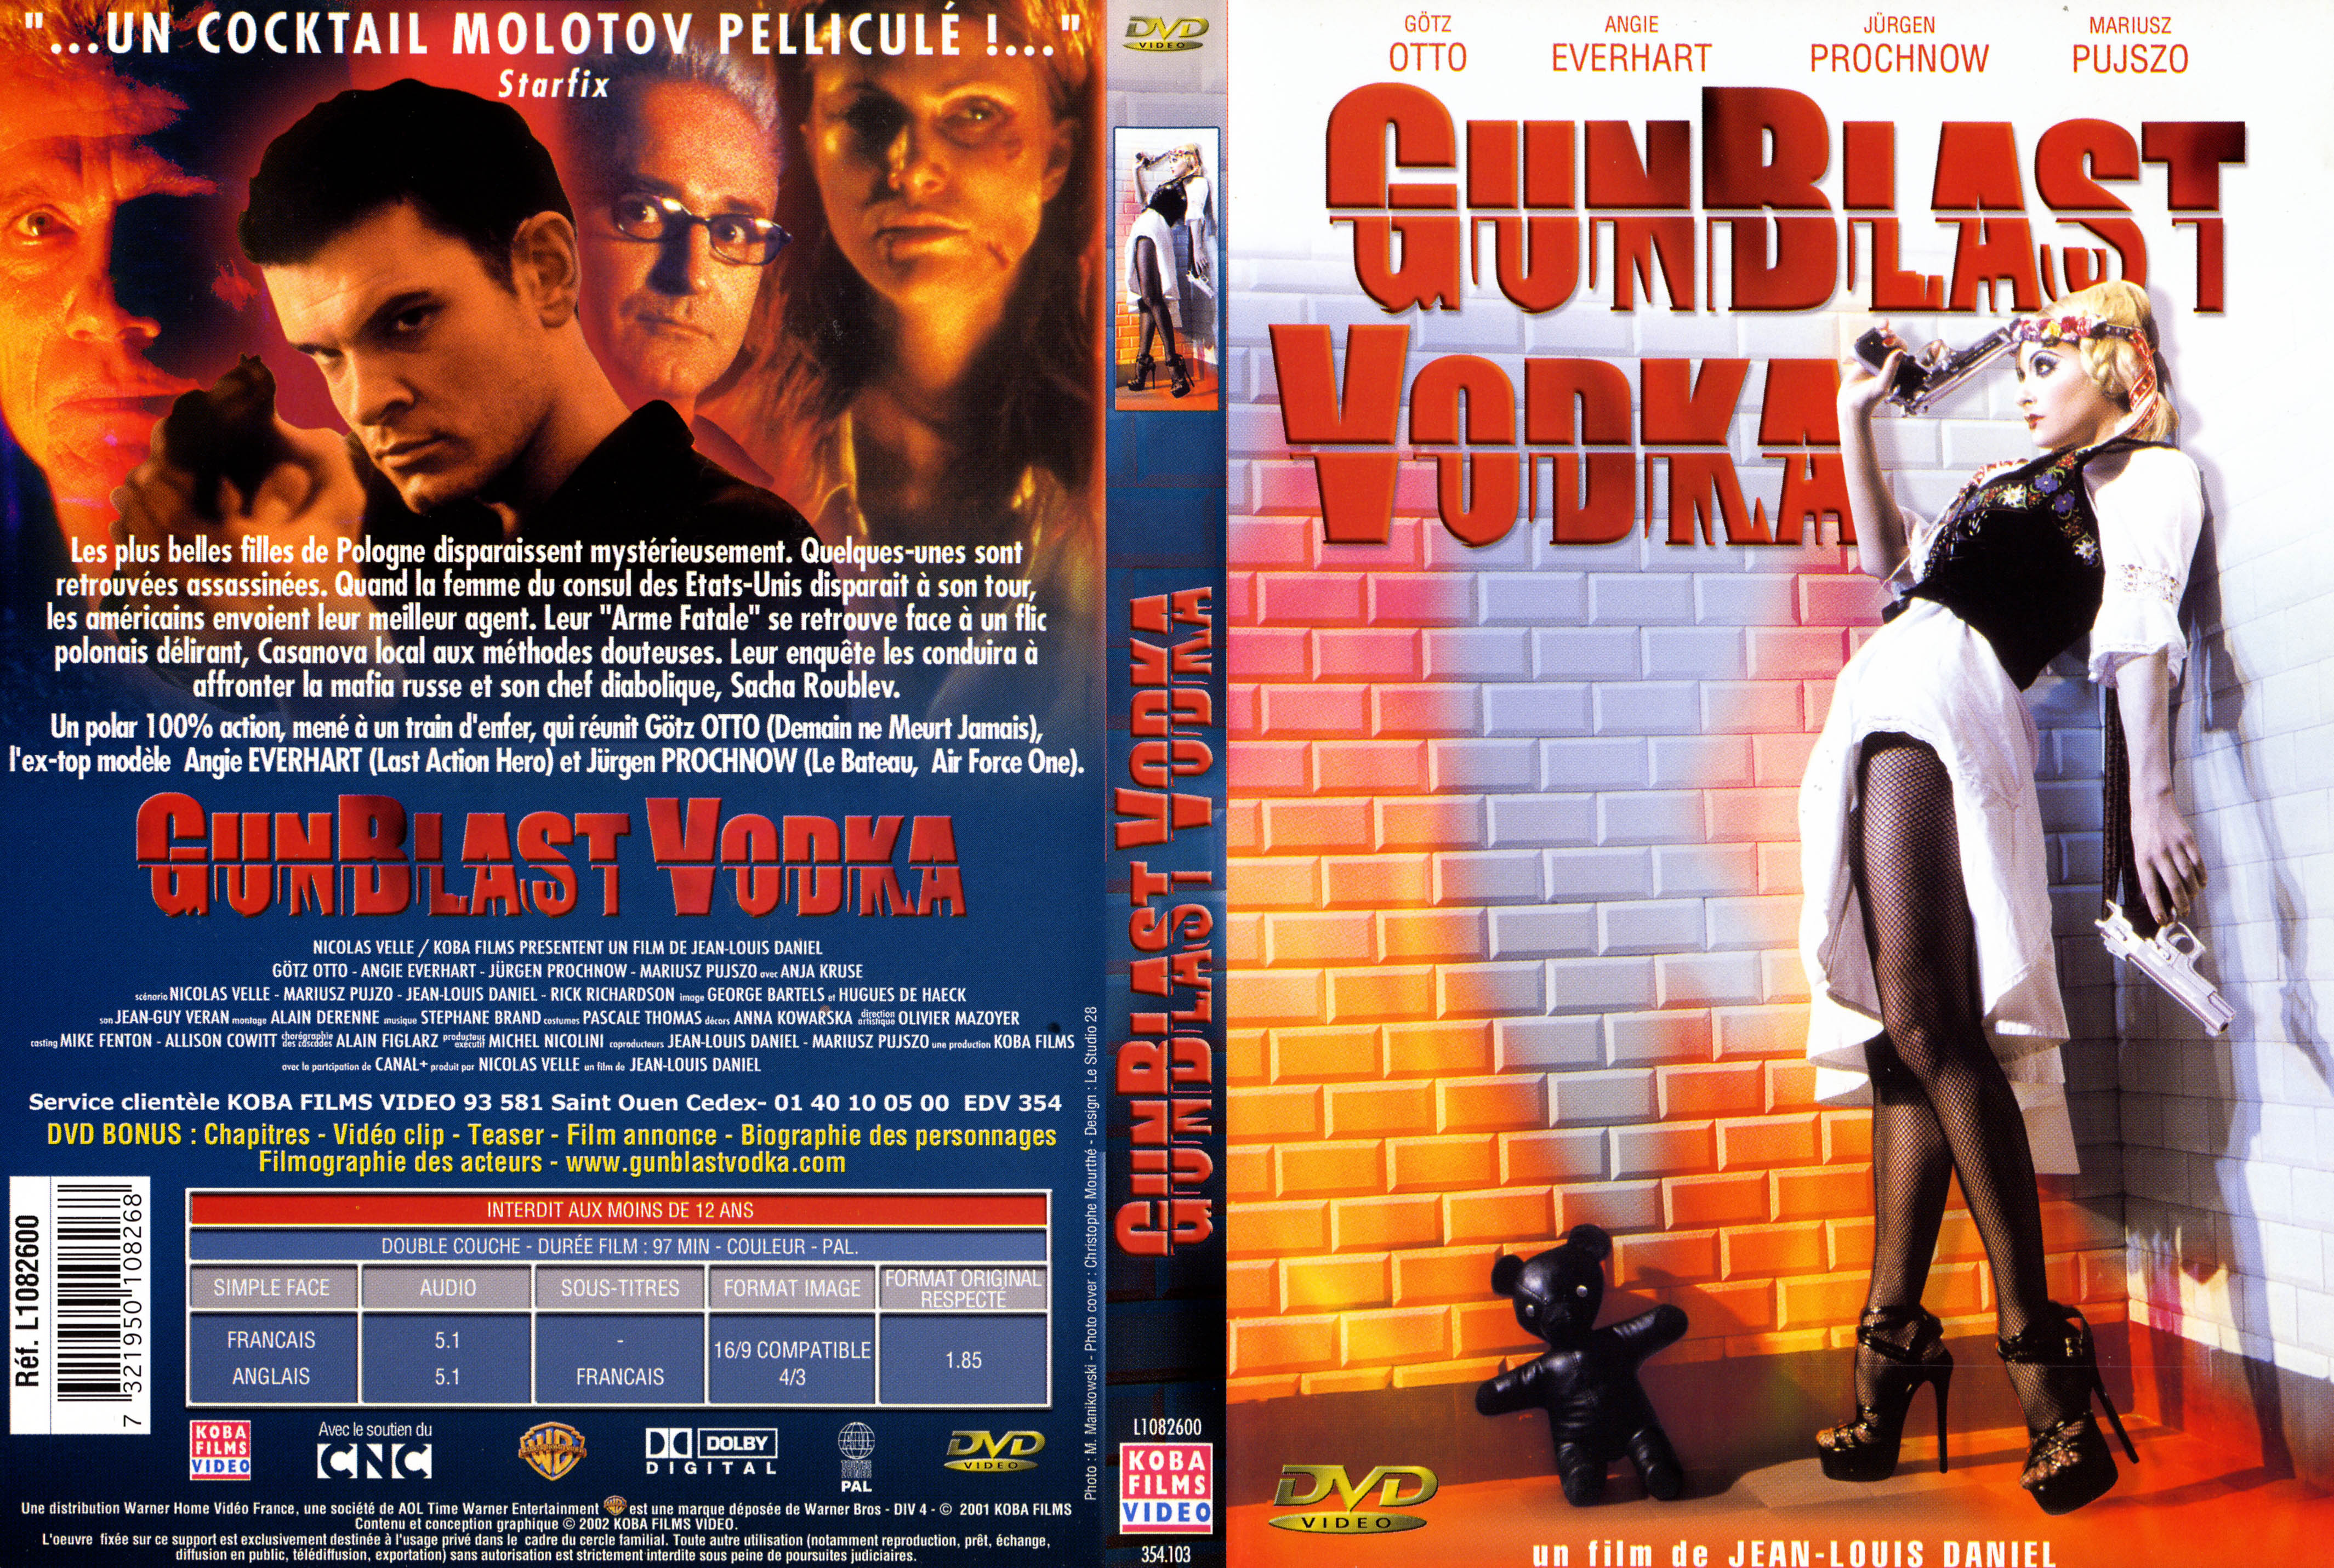 Jaquette DVD Gunblast Vodka